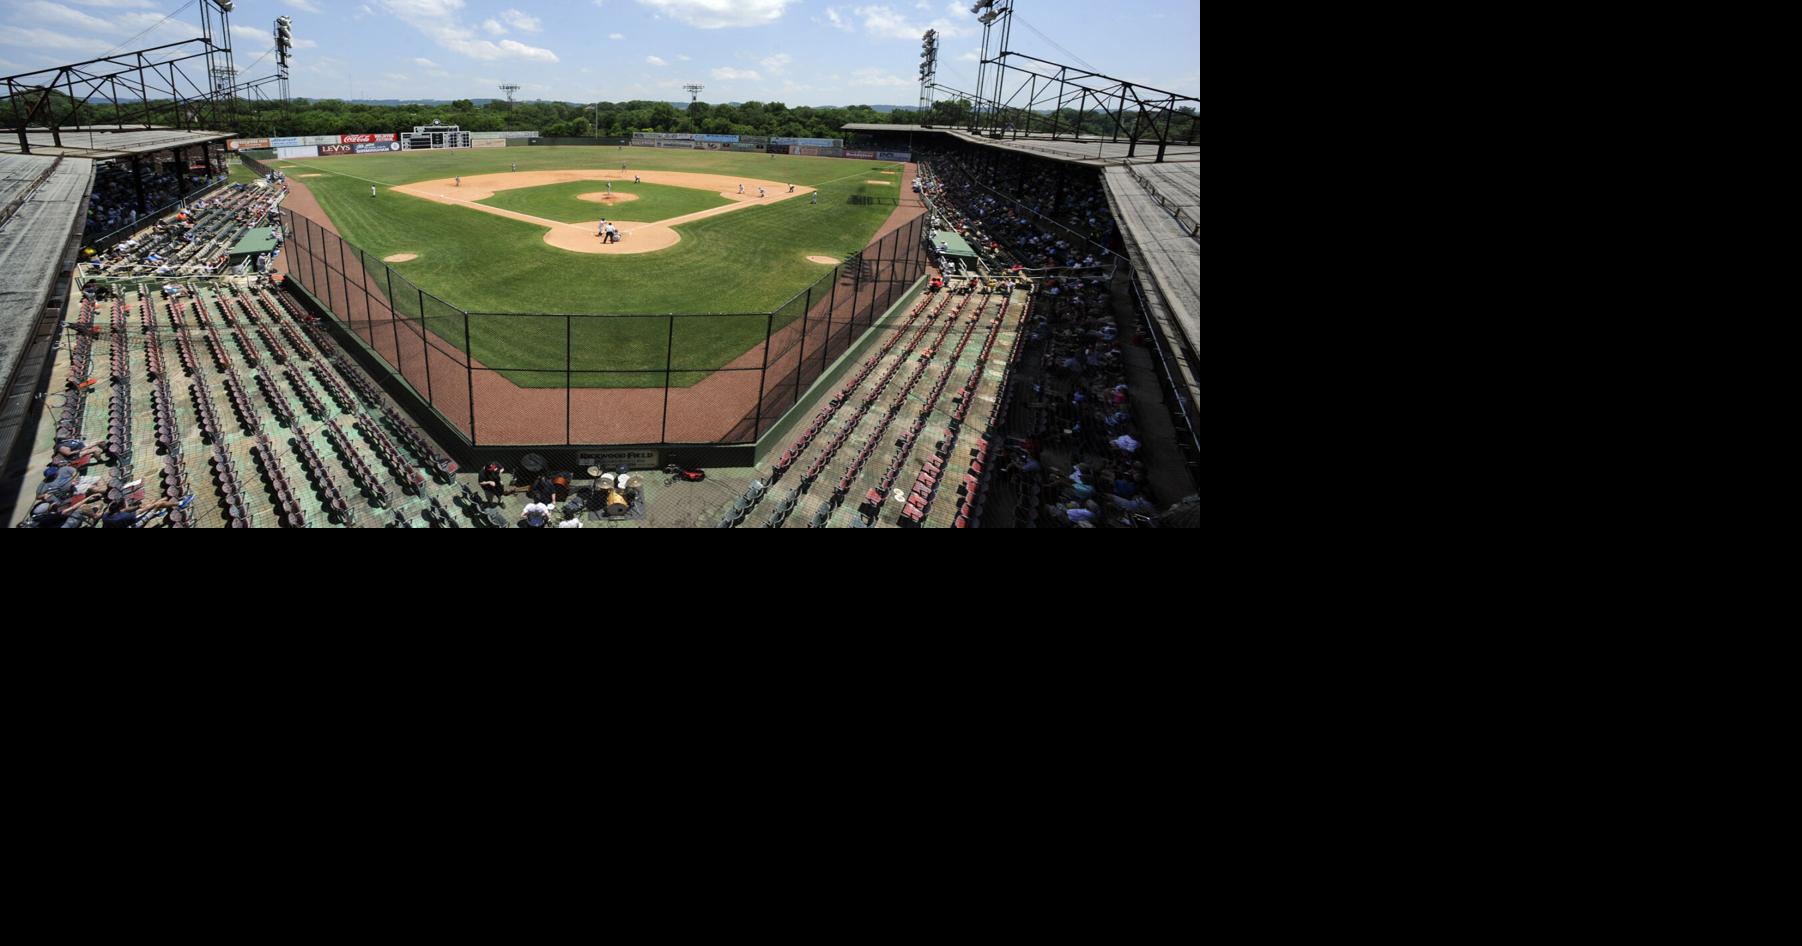 Illinois, Missouri legislatures playing softball game at Busch Stadium